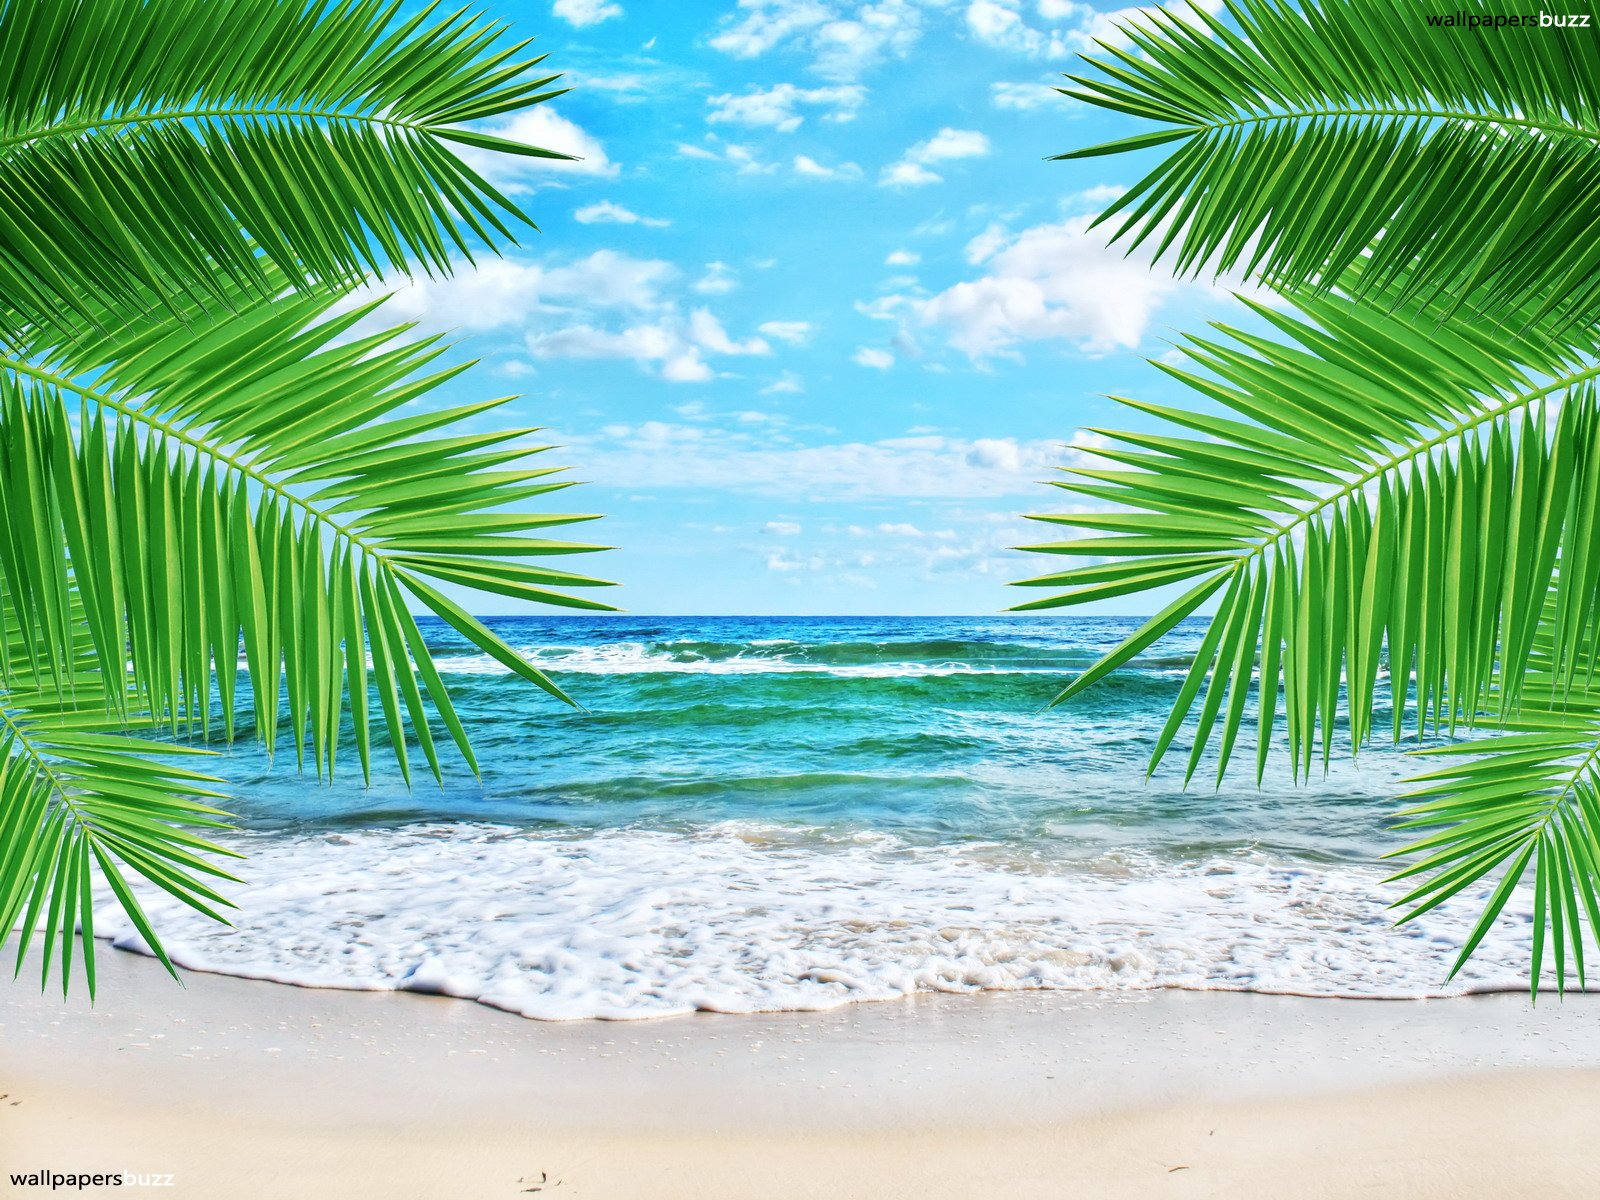 Hawaii Beach Photos, Download The BEST Free Hawaii Beach Stock Photos & HD  Images